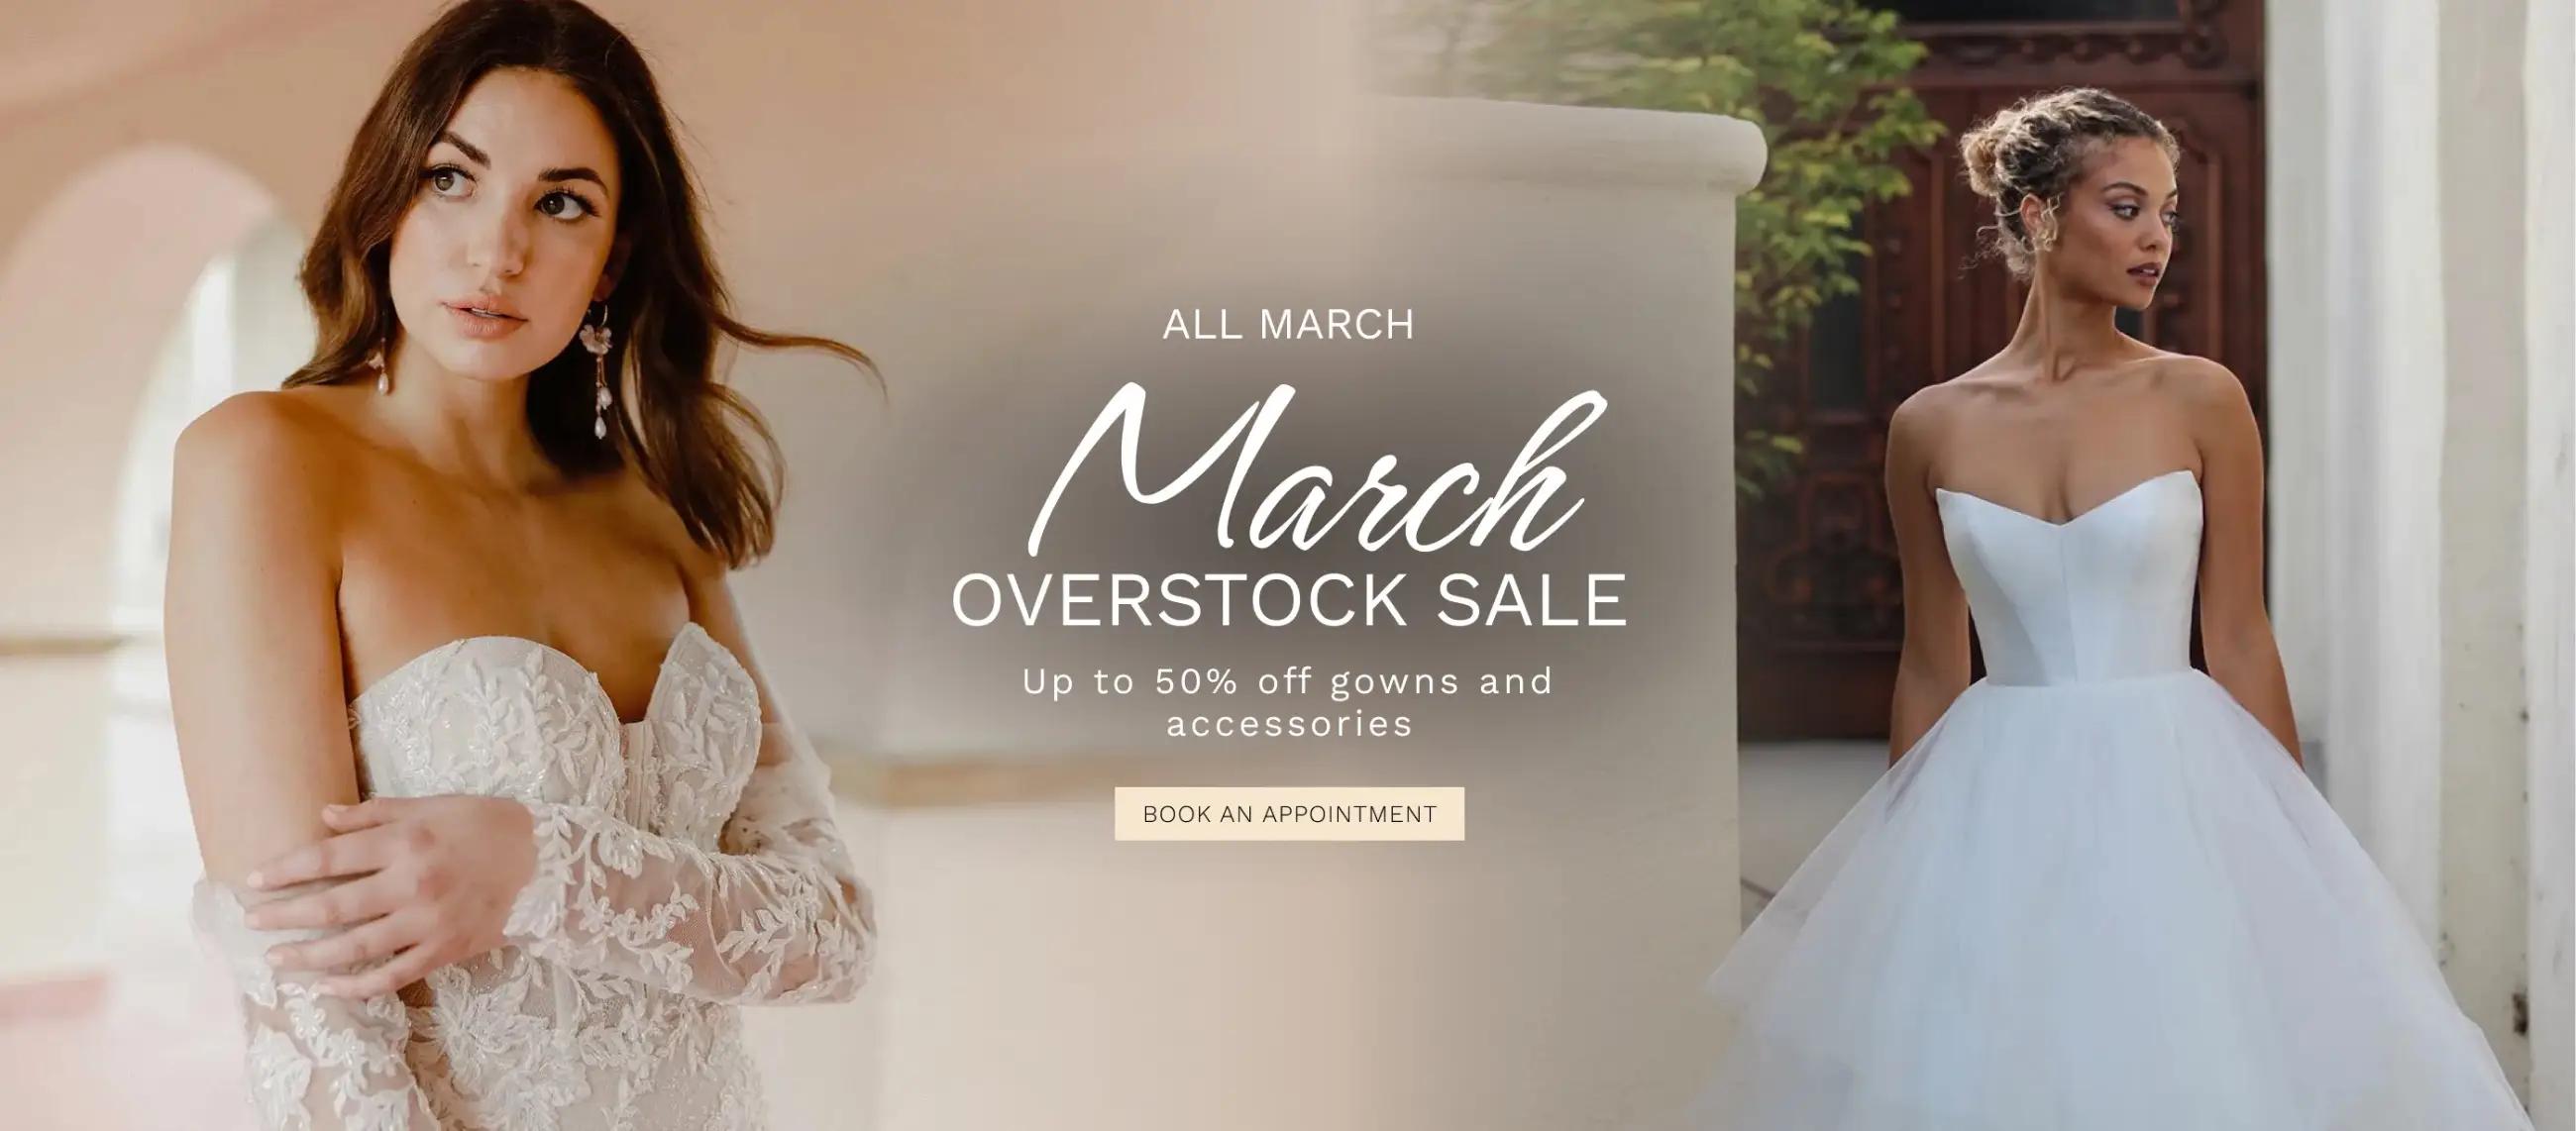 March Overstock Sale Banner for Desktop